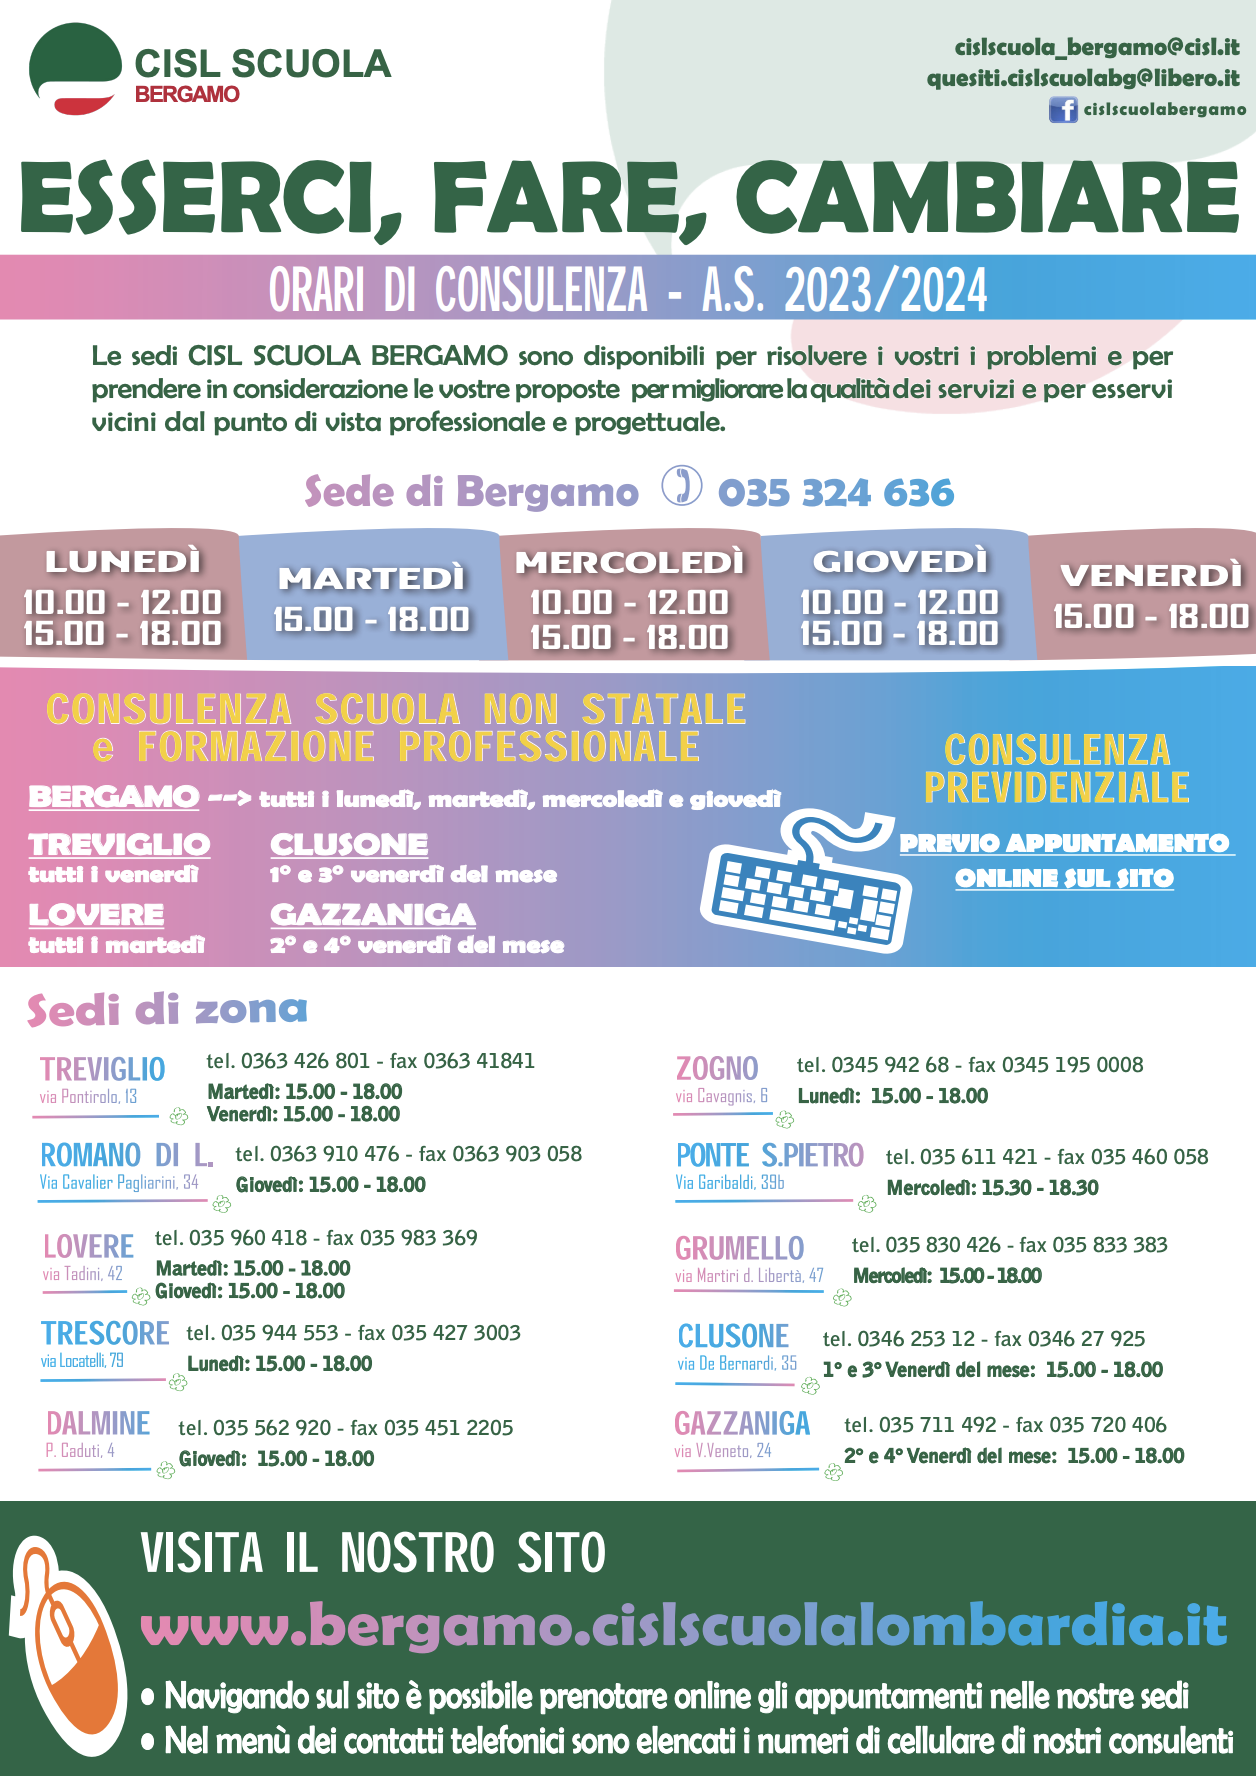 Orari CISL Scuola Bergamo 23-24